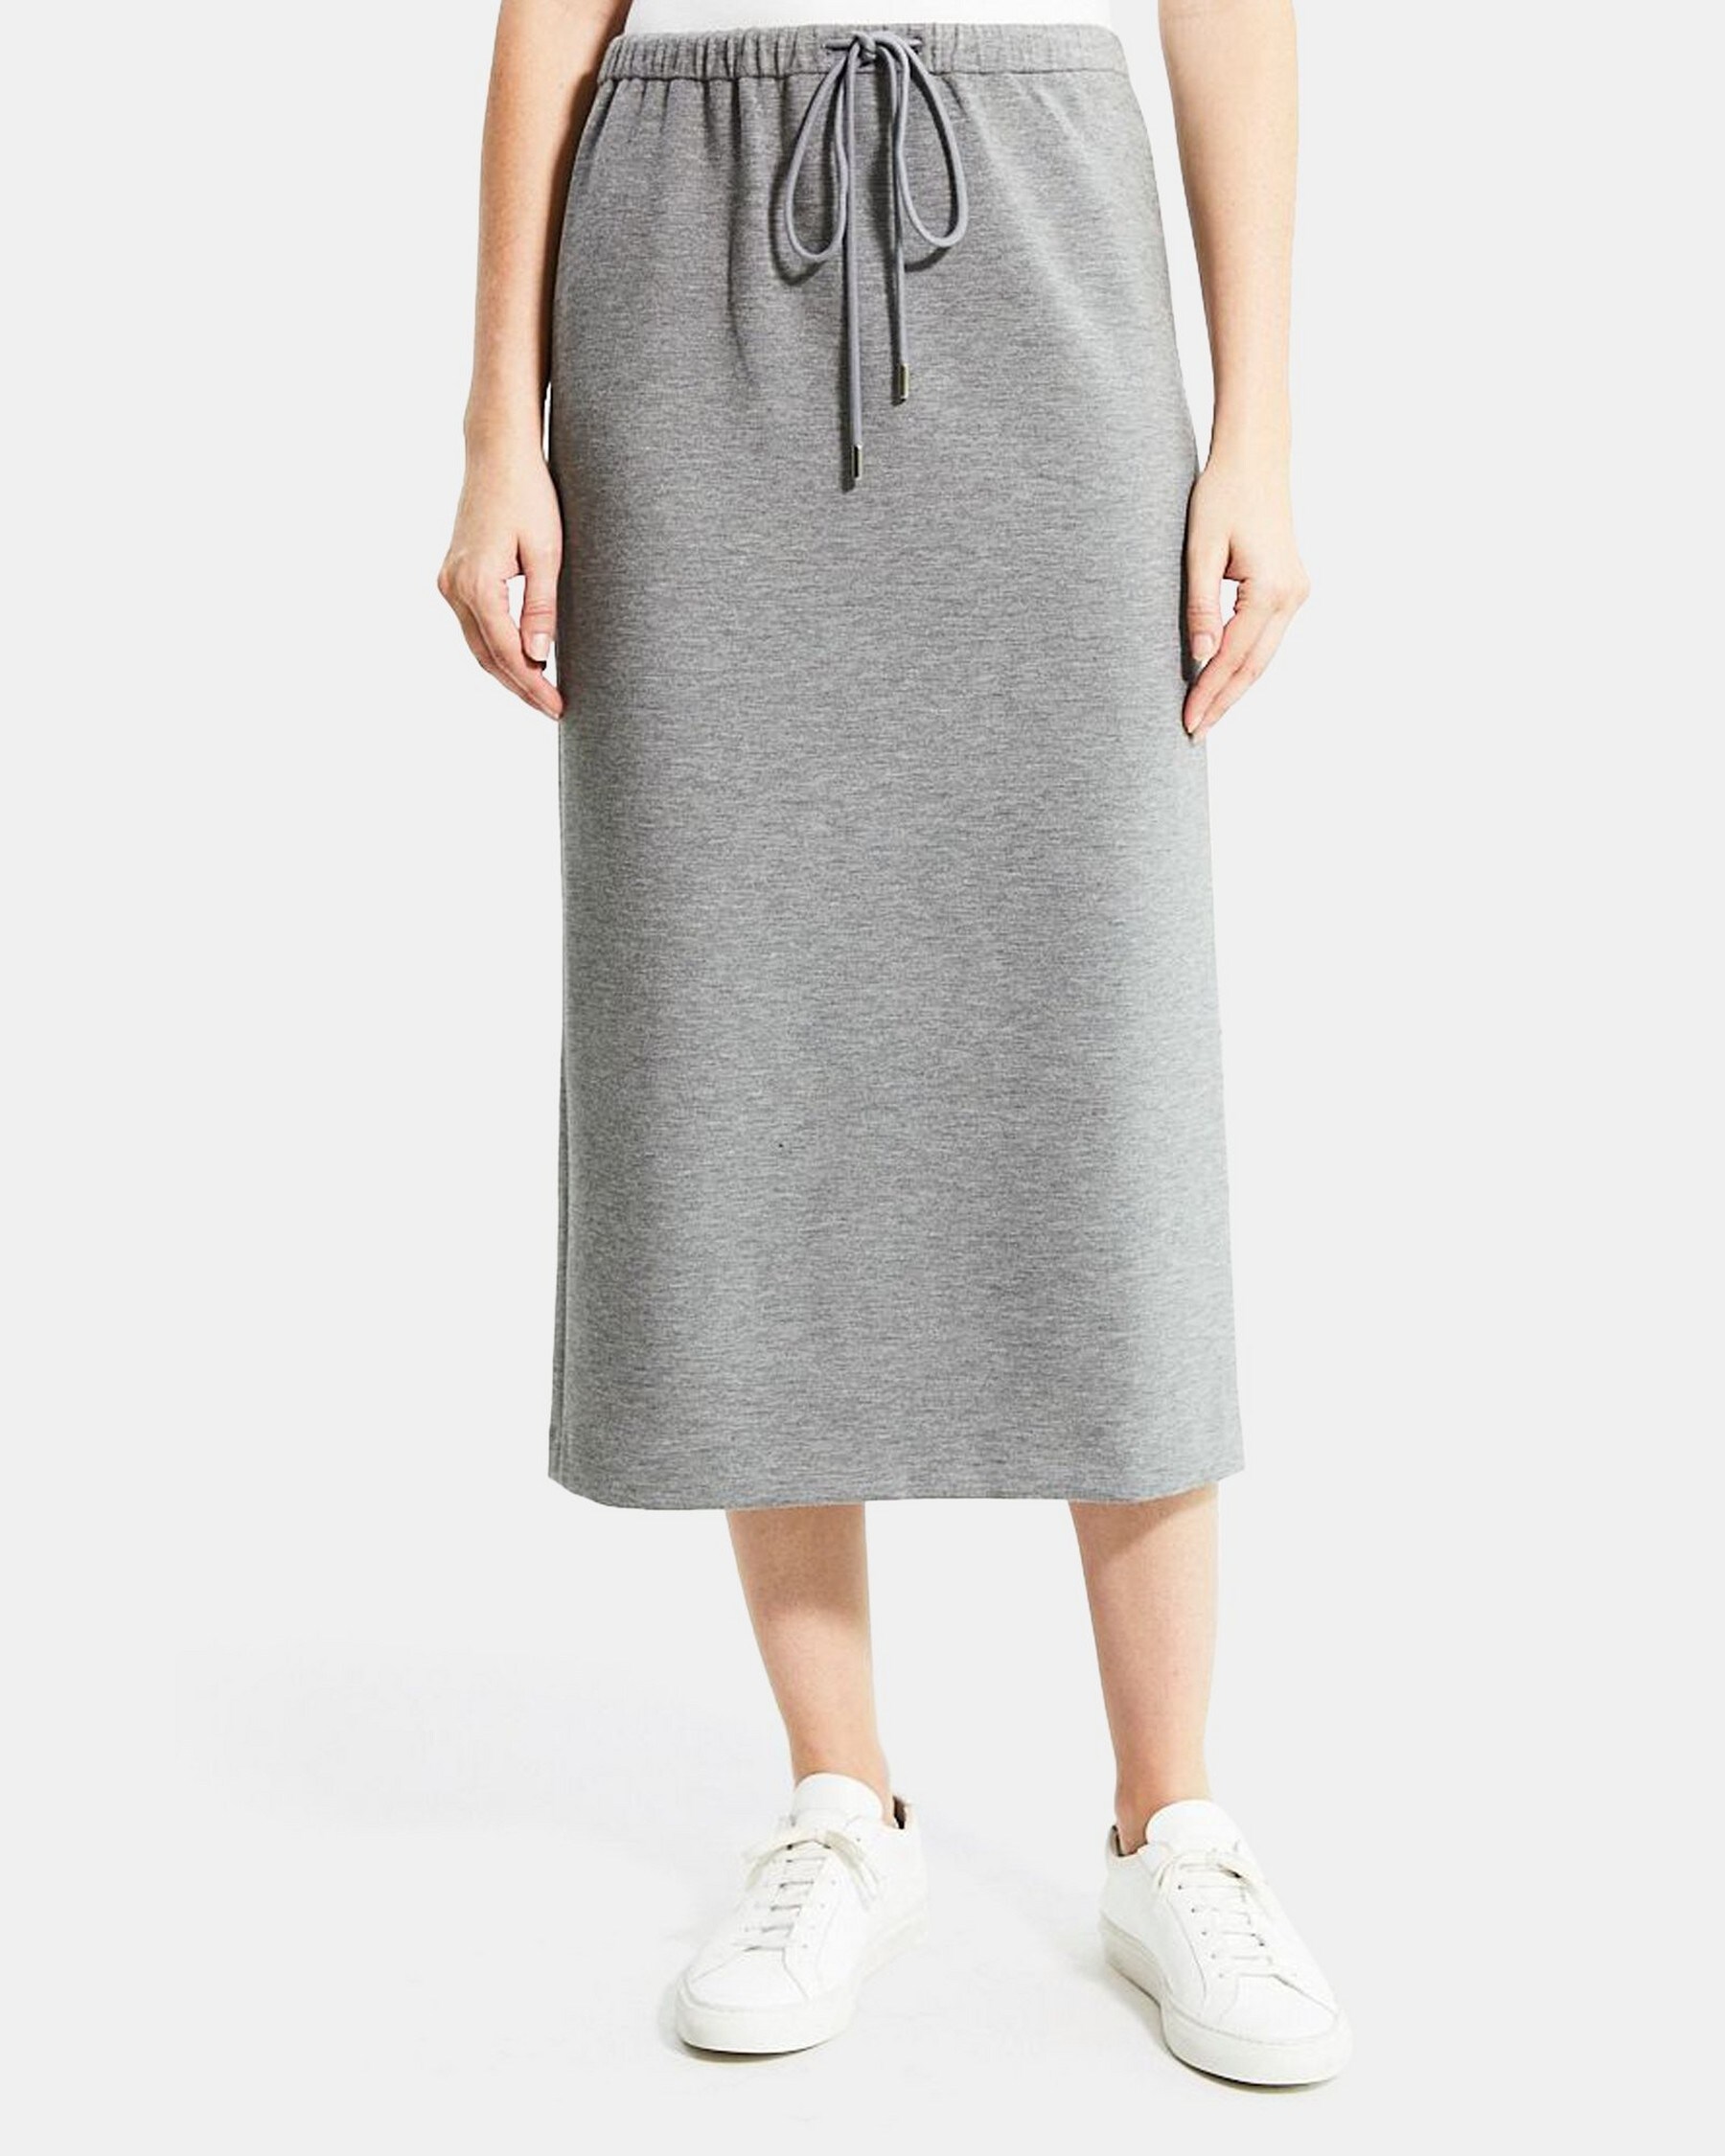 Drawstring Slip Skirt in Double-Knit Jersey